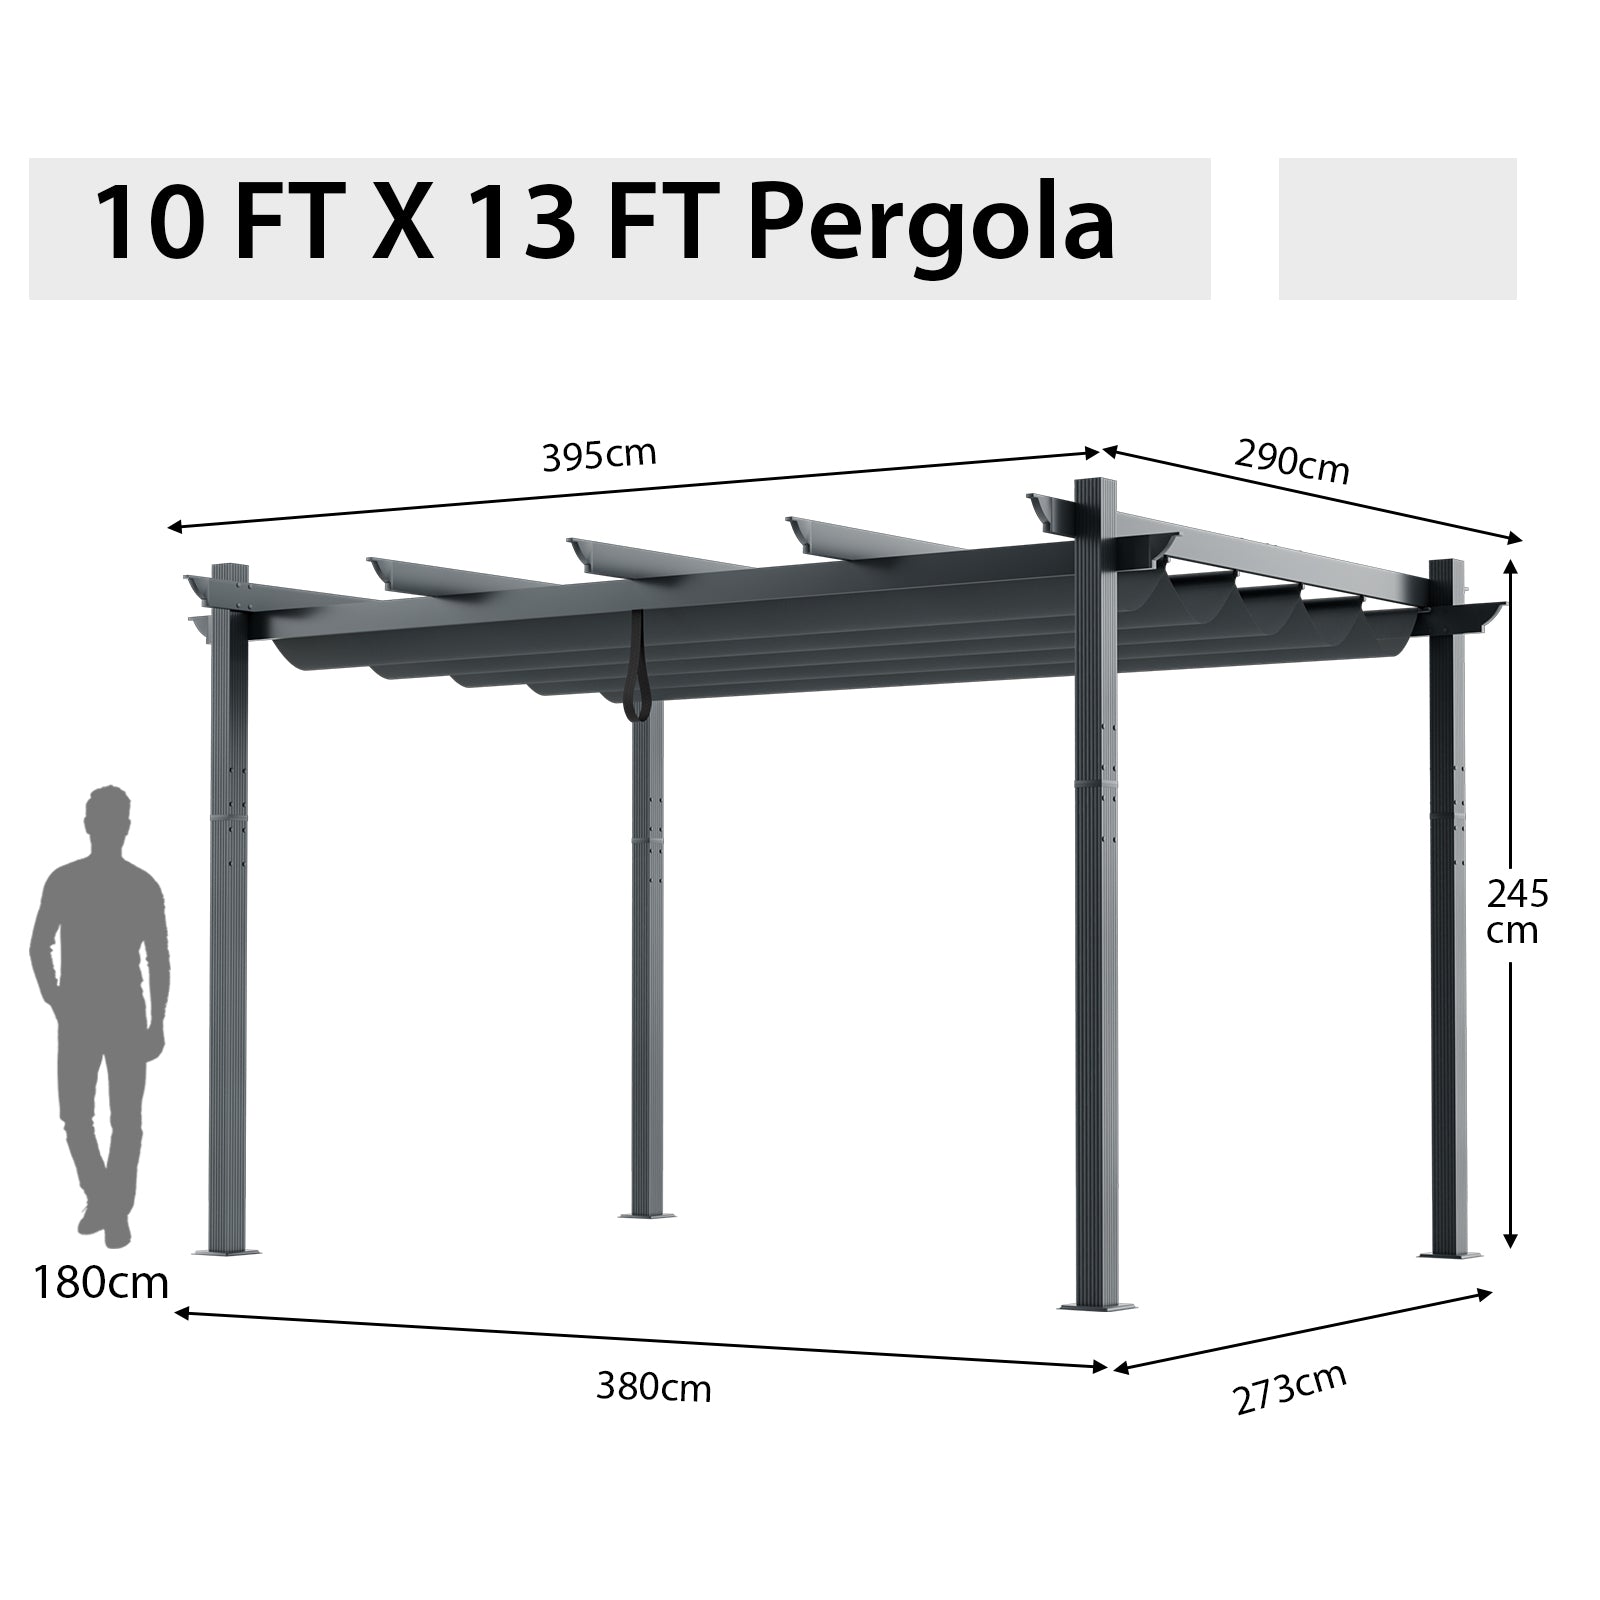 3 x 4 M Outdoor Retractable Pergola with Sun Shade Canopy-Grey